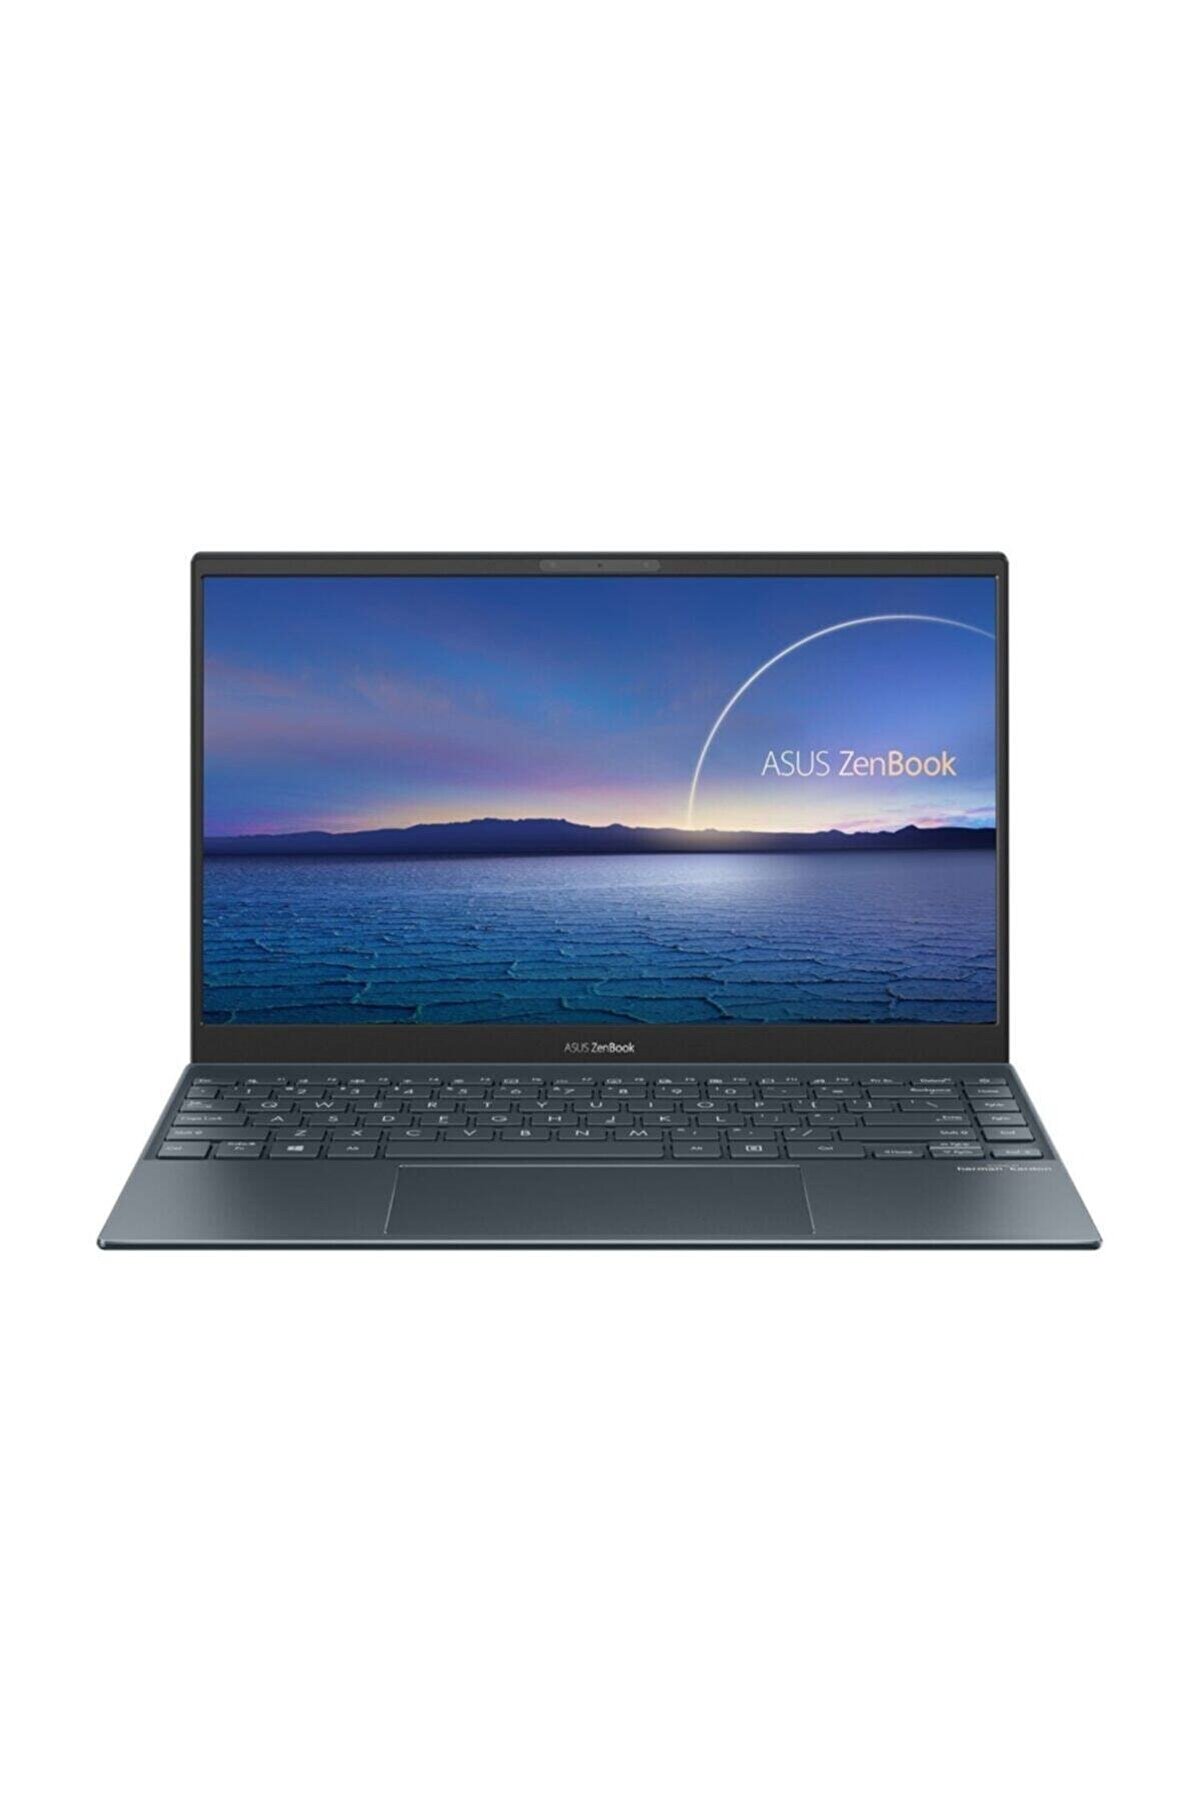 ASUS Zenbook UX325JA-EG032 i5 1035G1 8GB 512GB SSD Dos 13.3 FHD Taşınabilir Bilgisayar